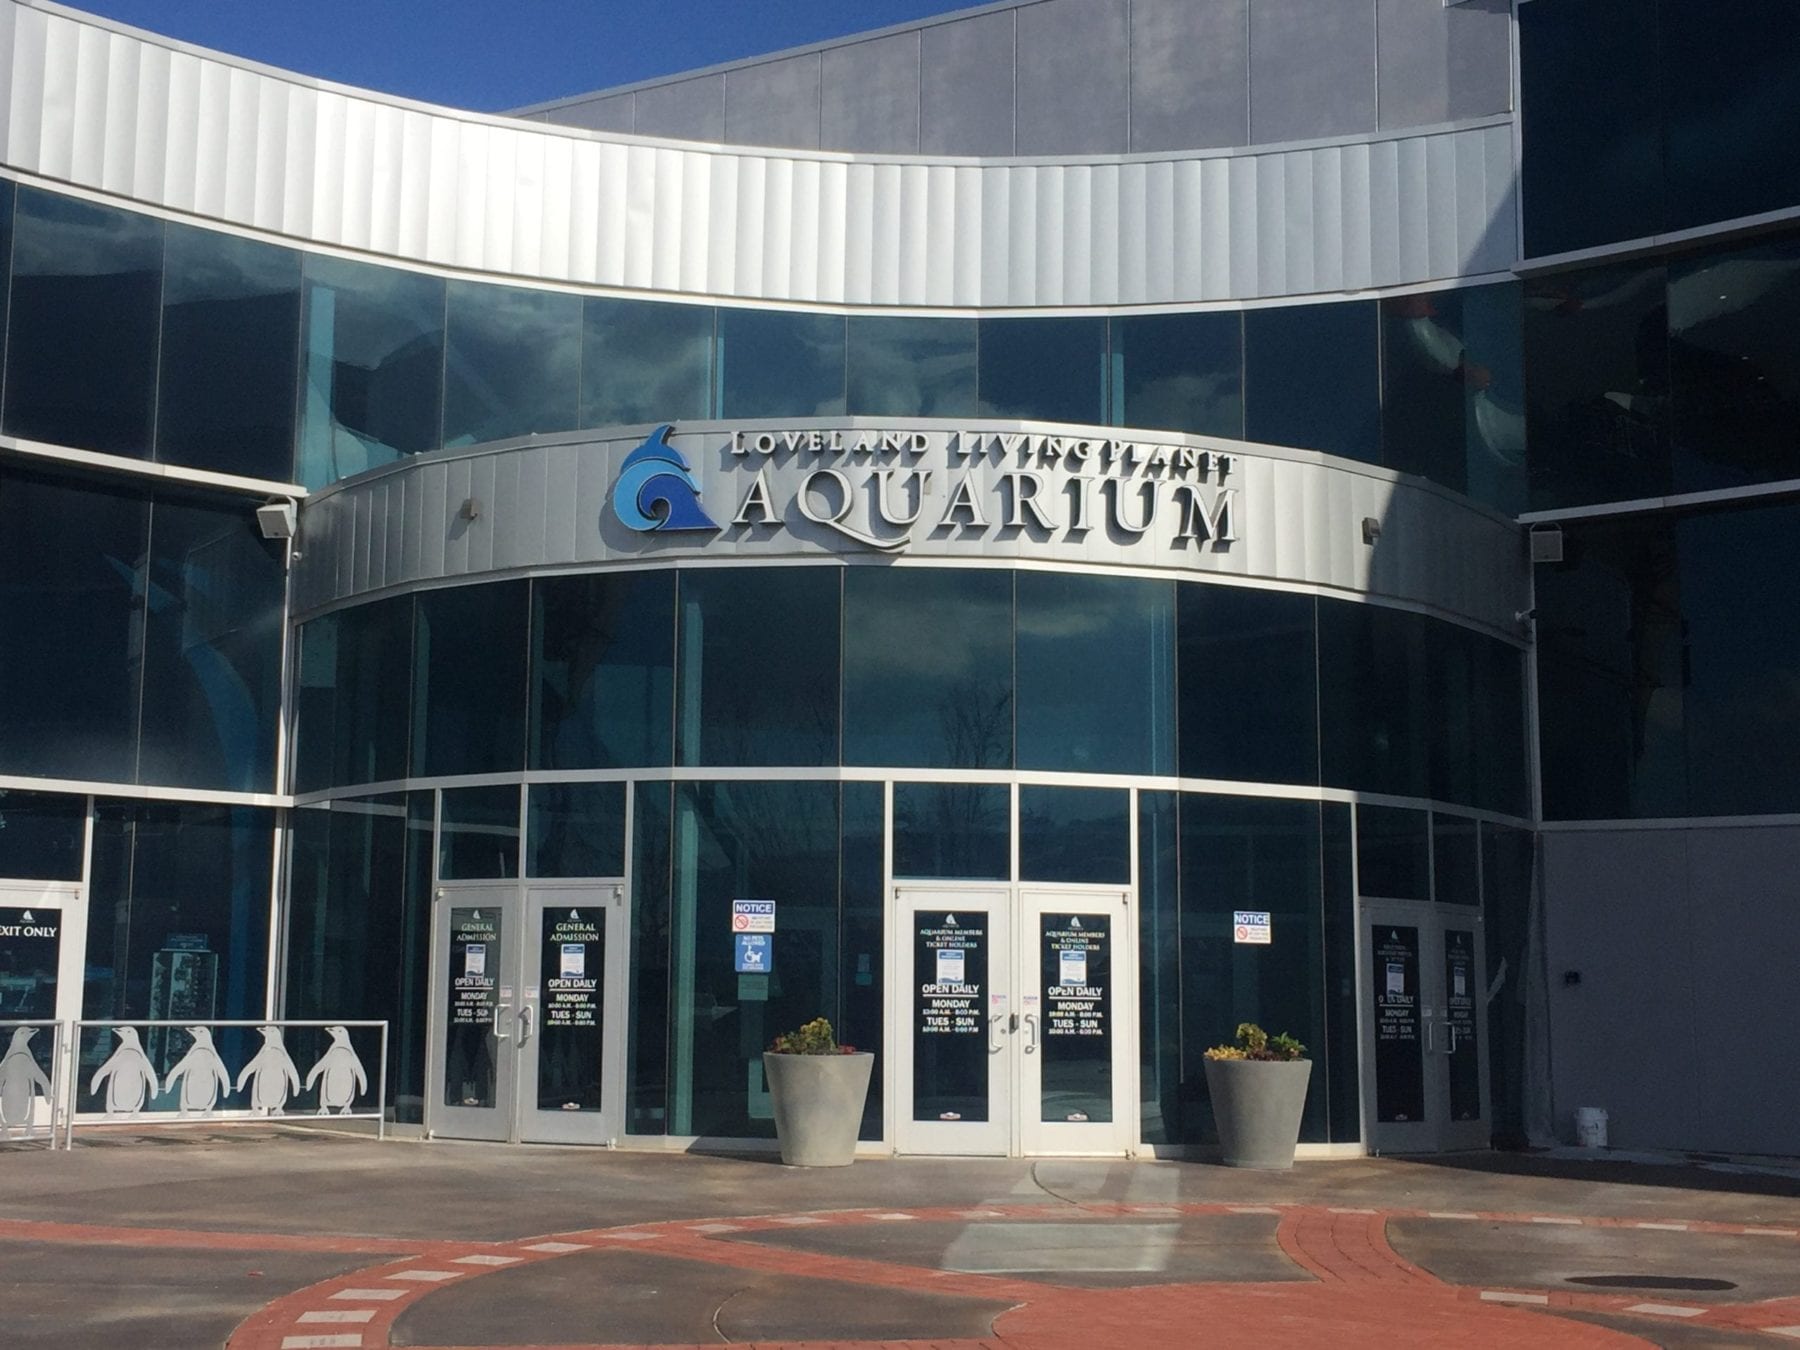 Things to do in Salt Lake City with kids-Loveland Living Planet Aquarium